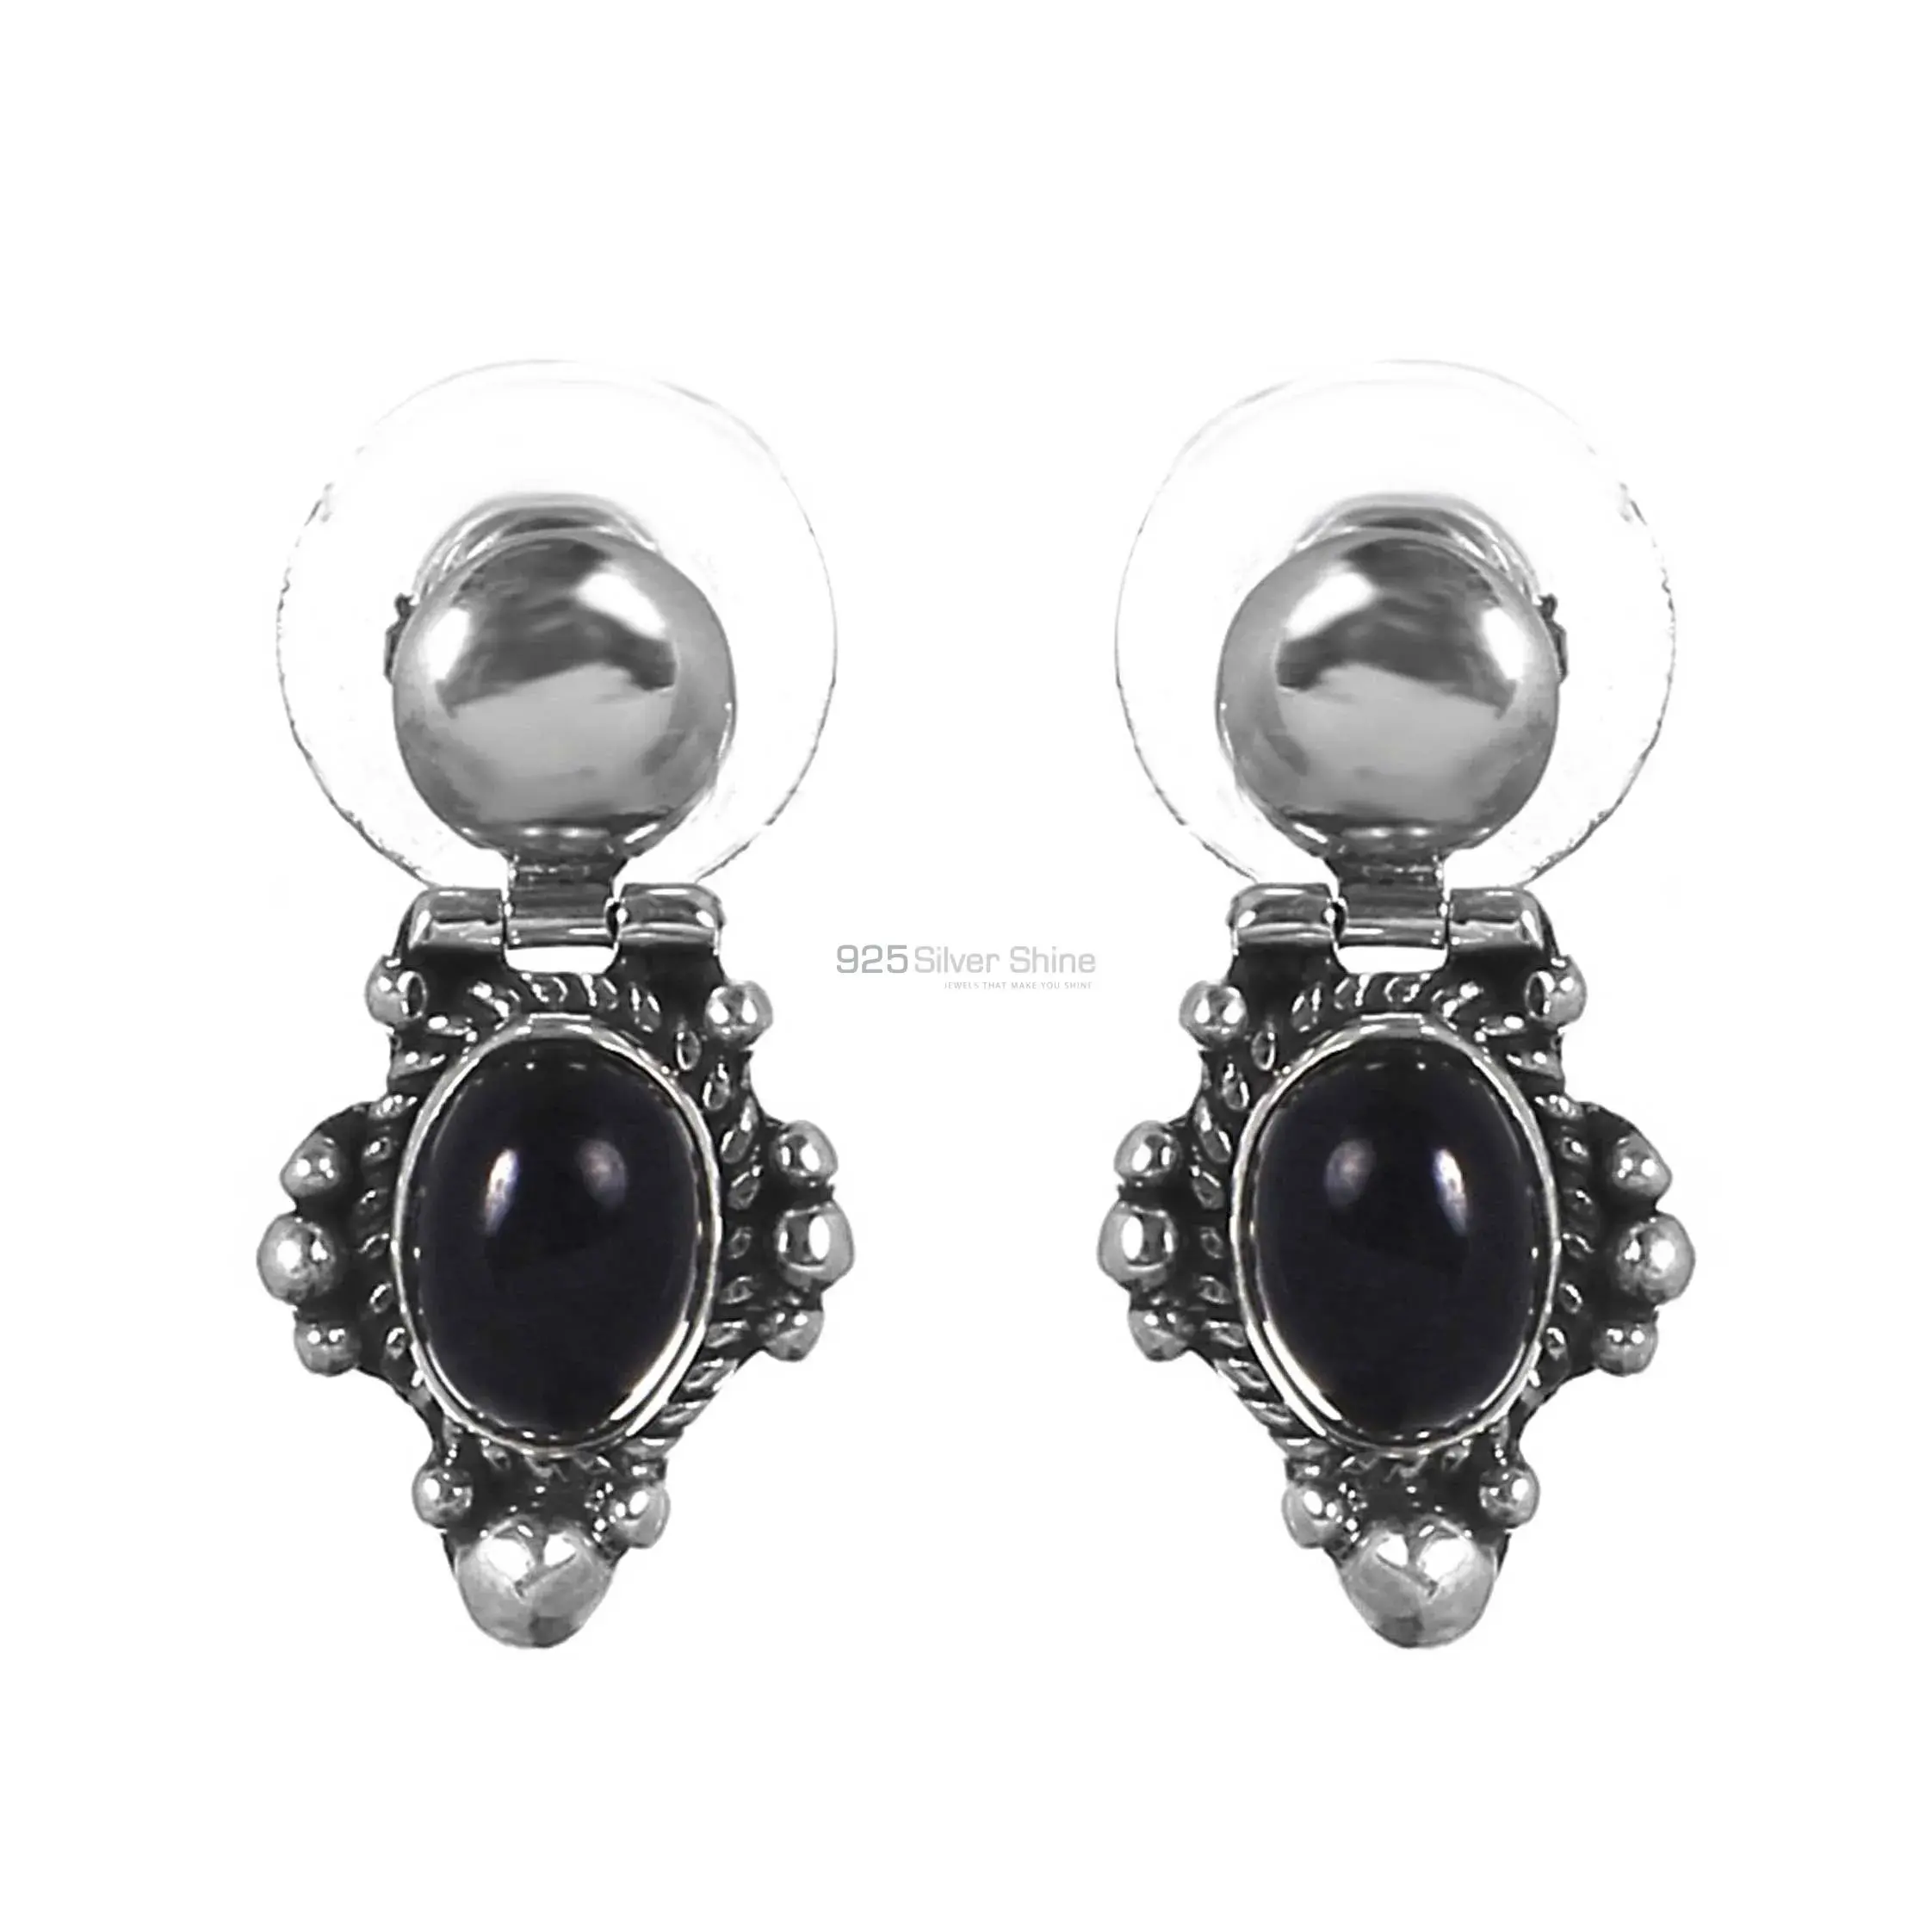 Genuine Black onyx Gemstone Earrings Suppliers In 925 Sterling Silver Jewelry 925SE258